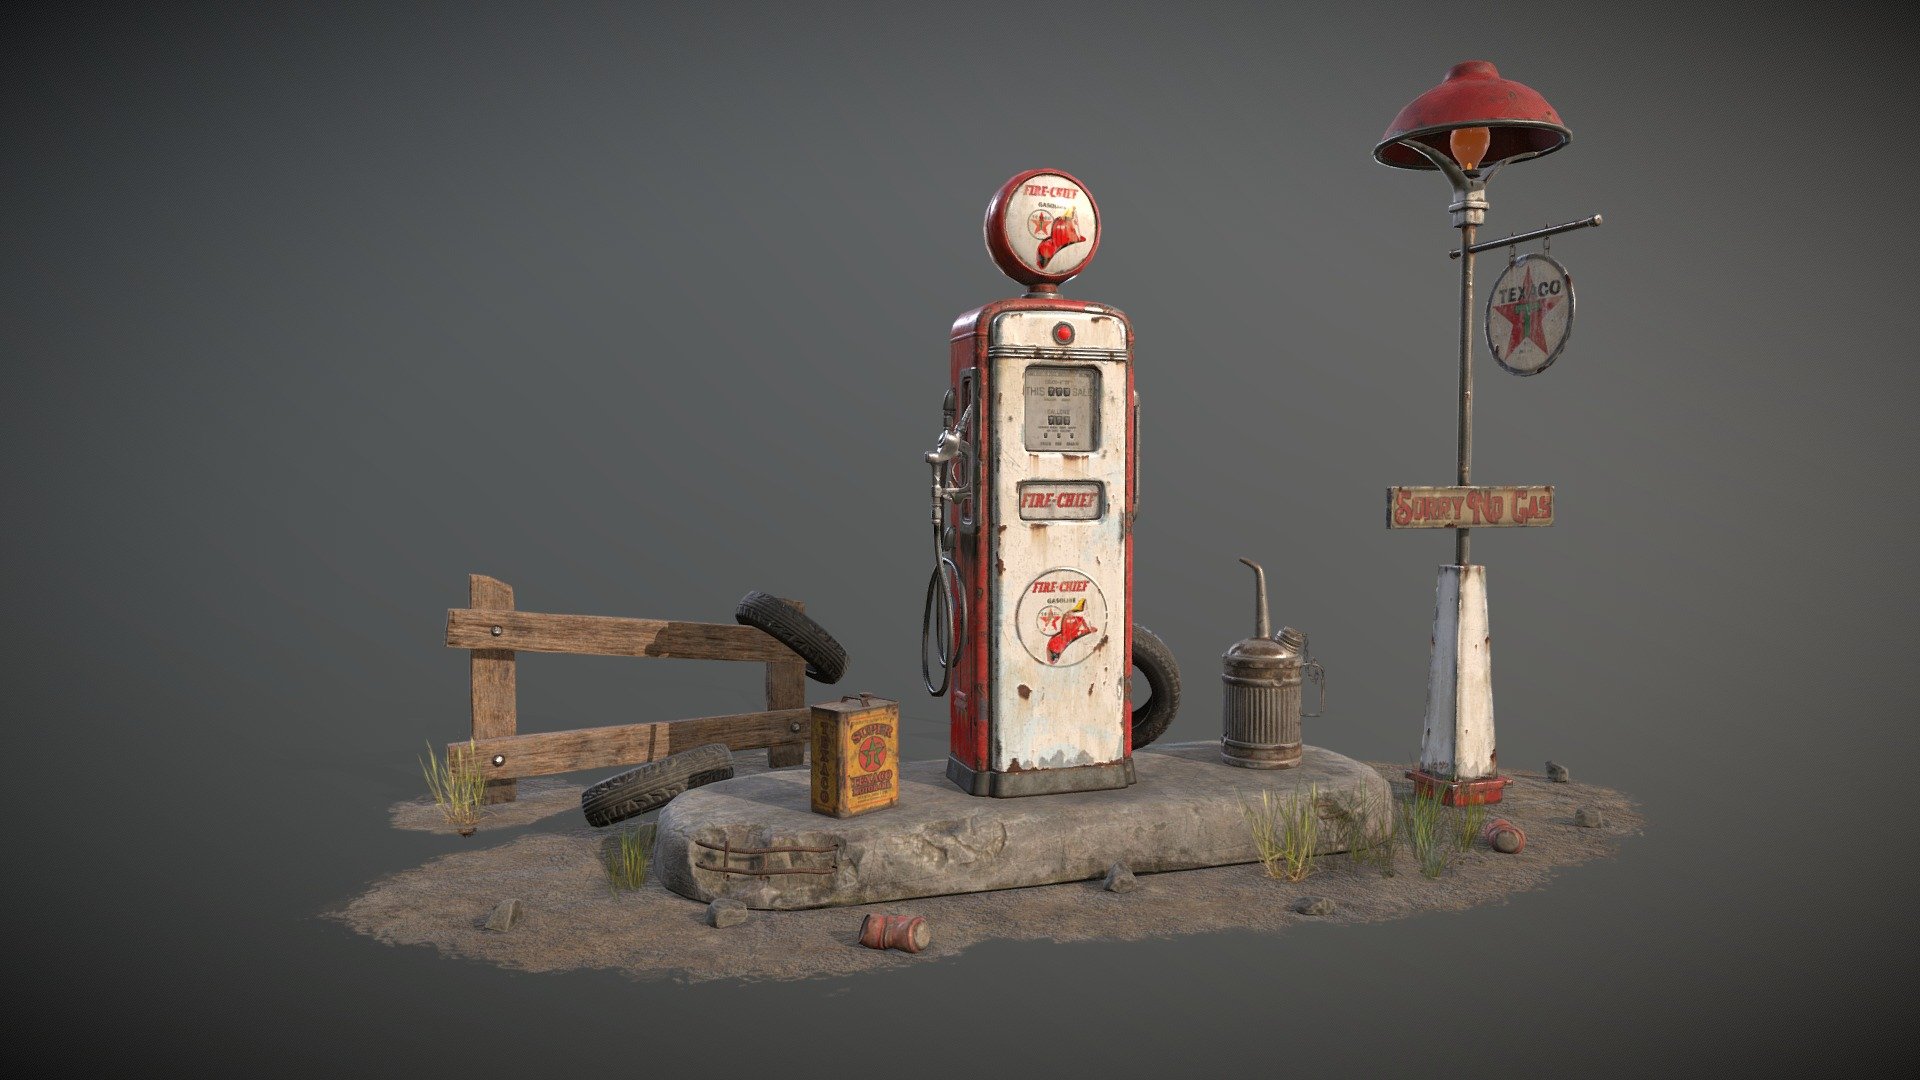 ArtStation - Vintage gas pump